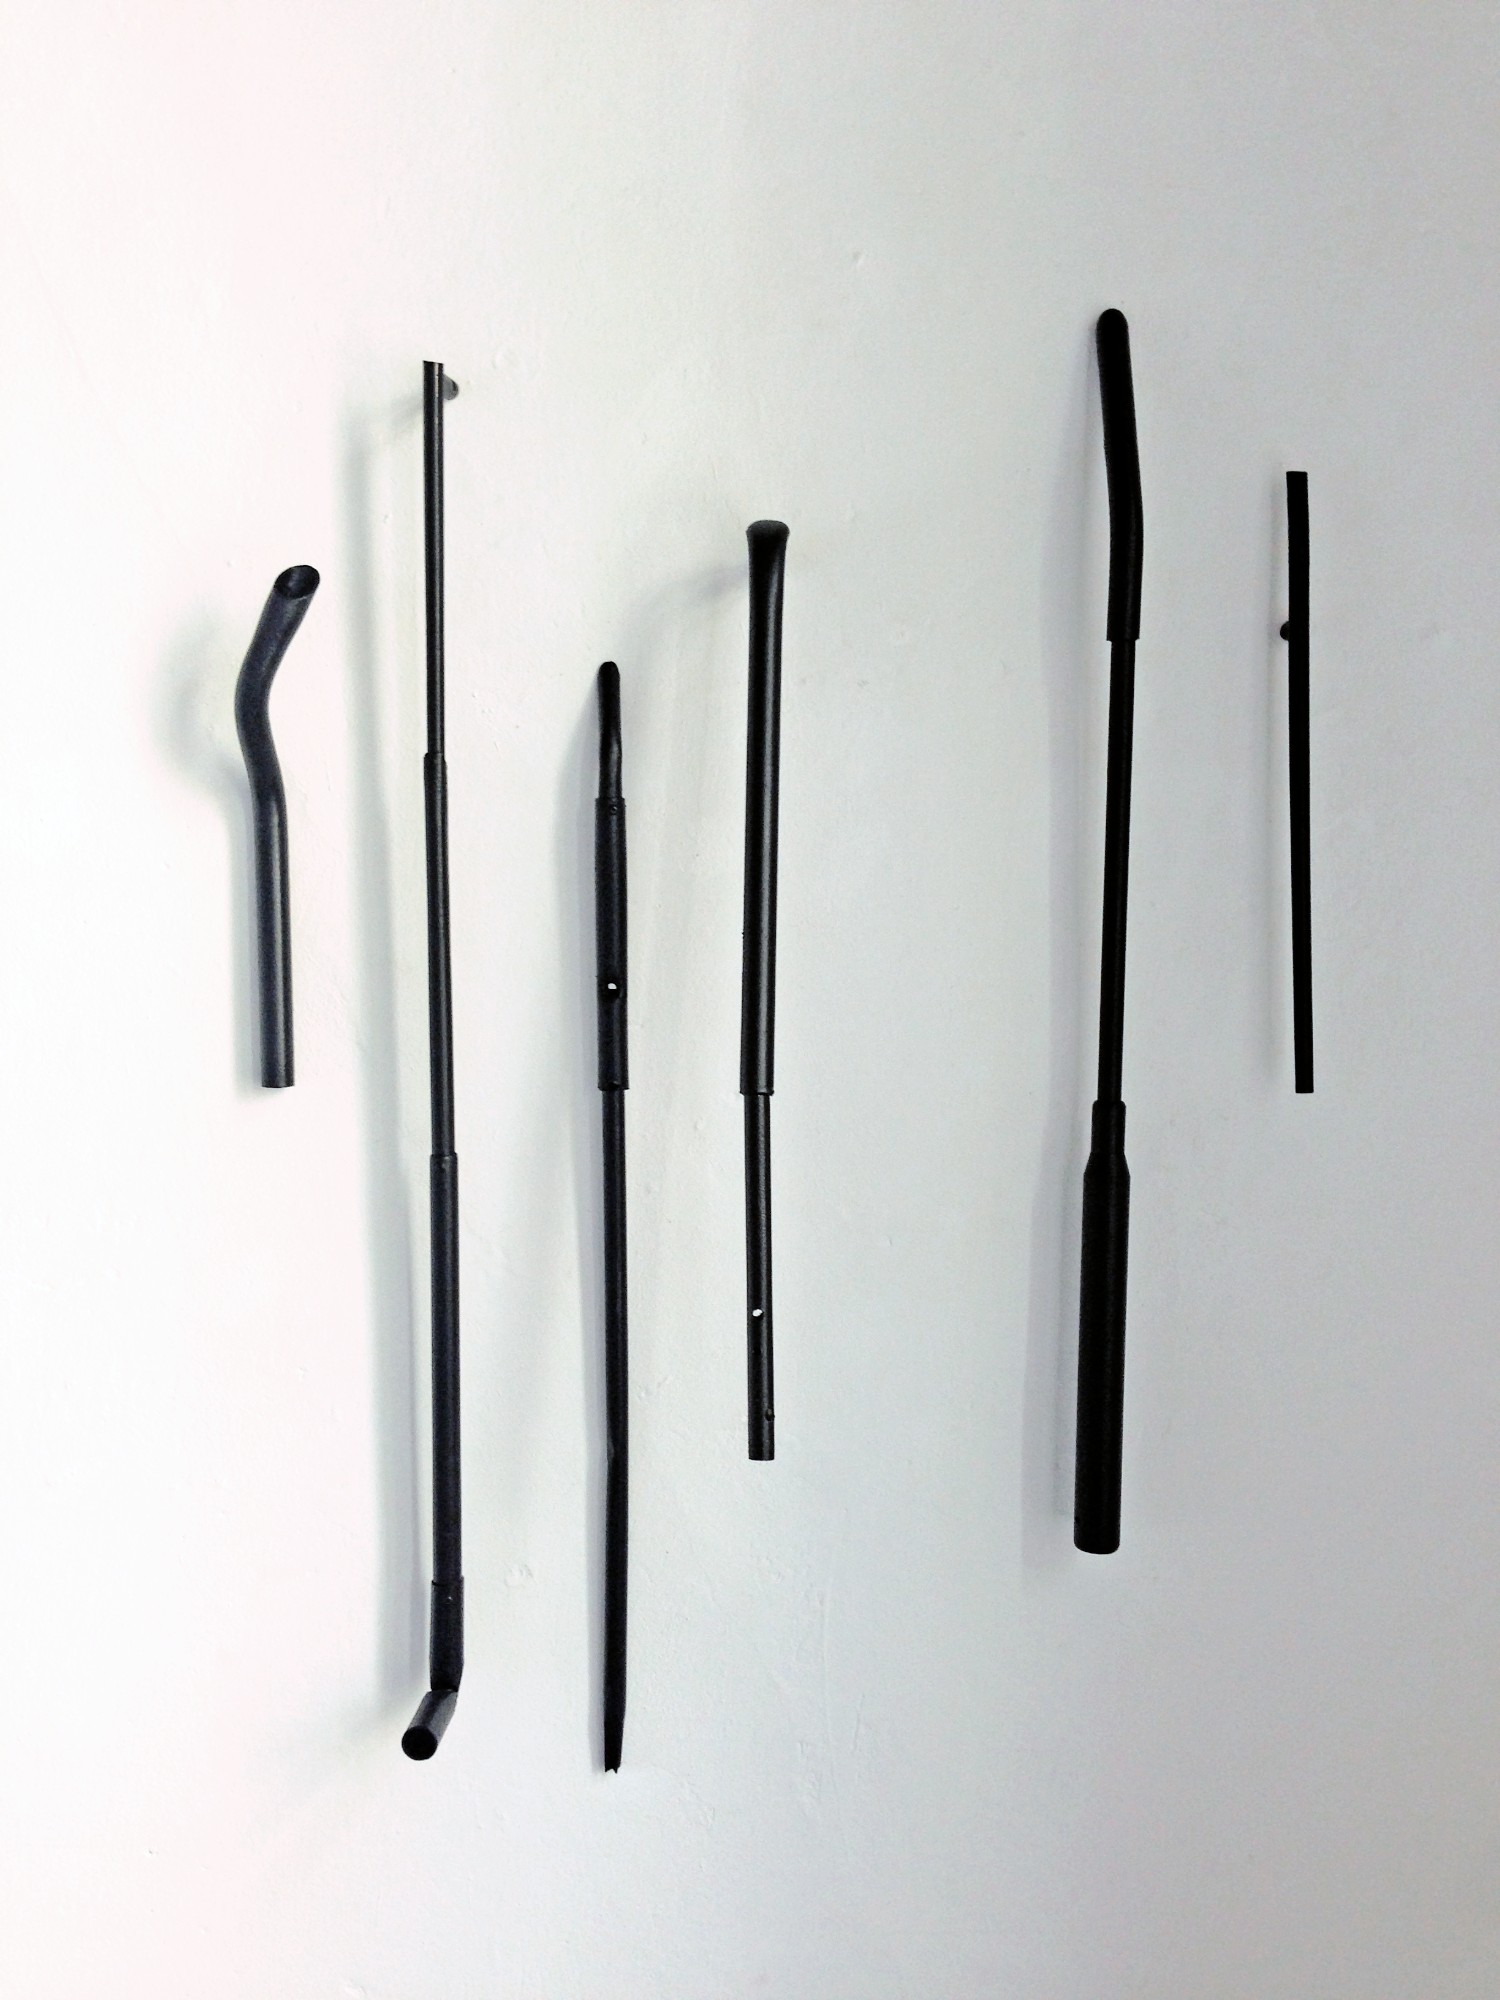 Madeleine Boschan, 6 Elemente (Parataxe), 2014, aluminium, lacquers, steel, 110 x 80 x 15 cm